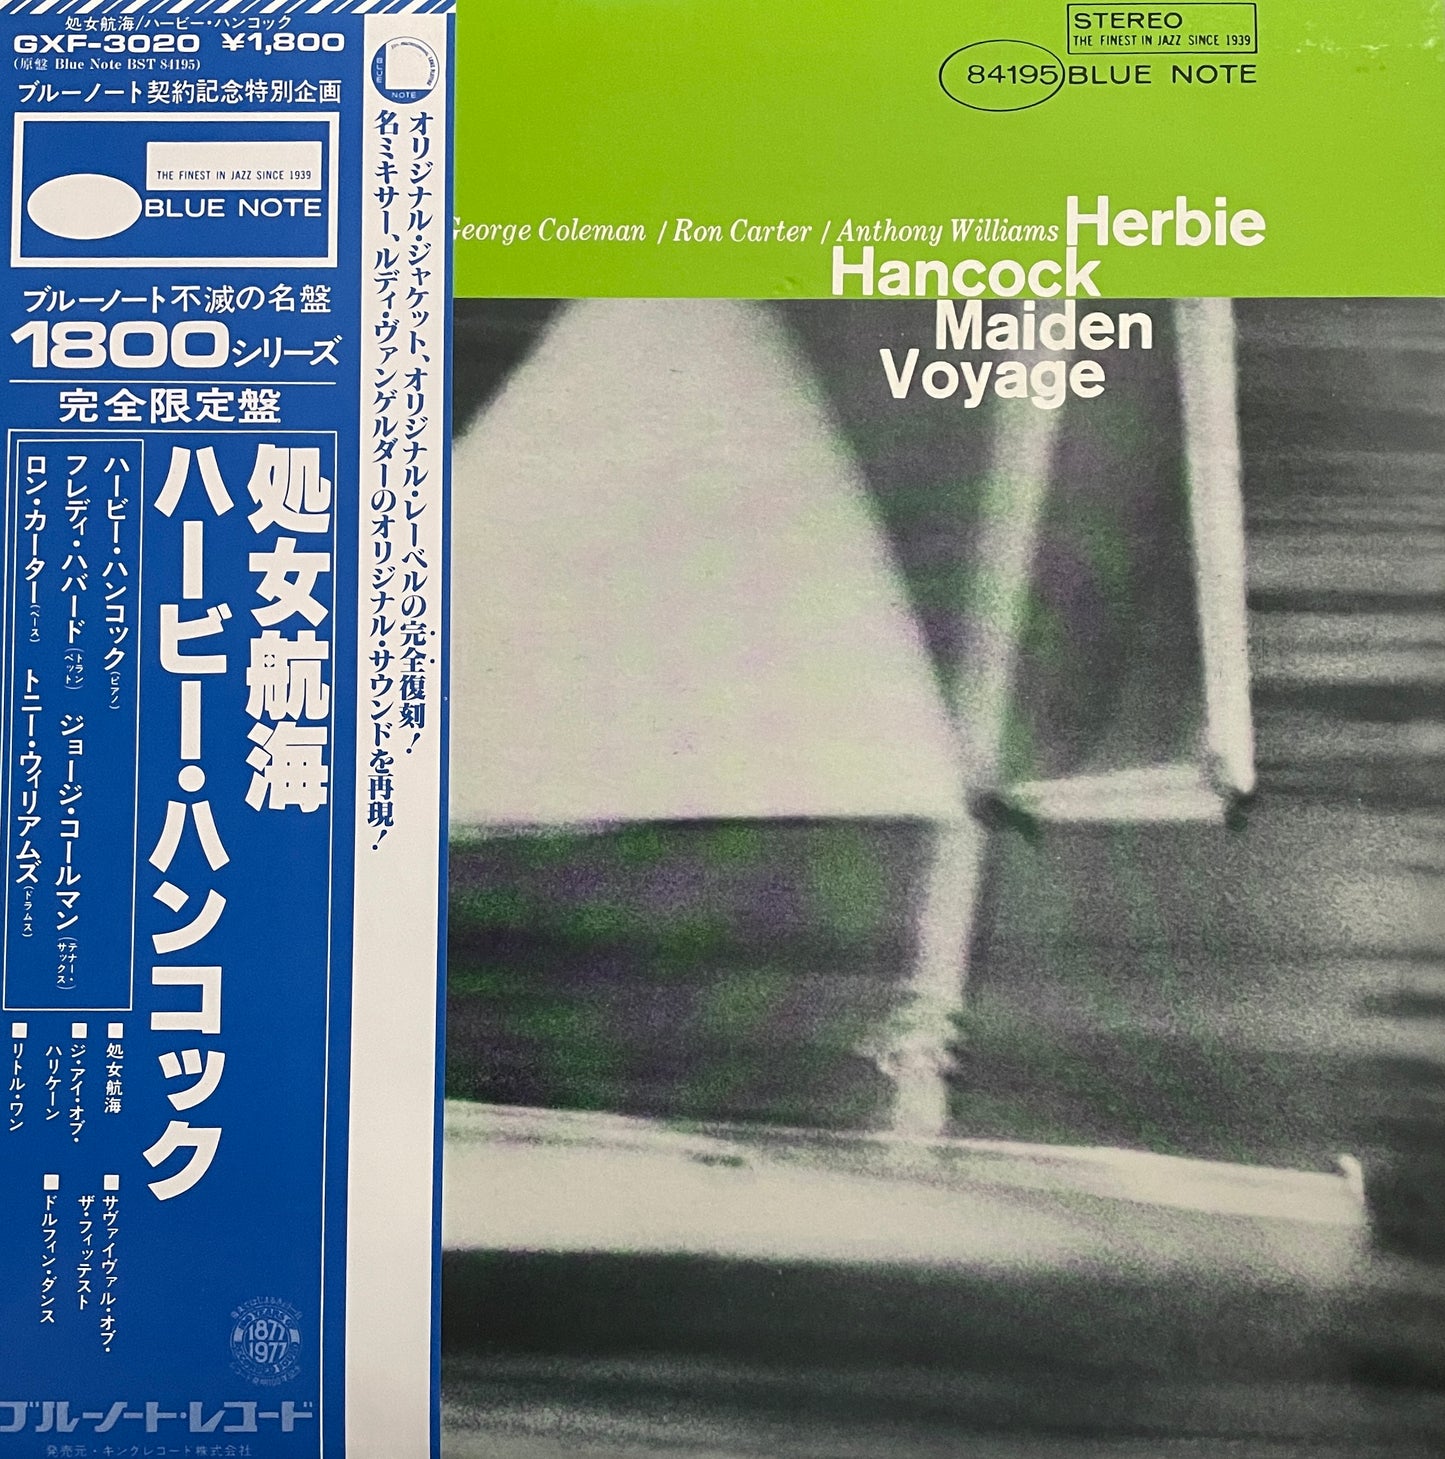 Herbie Hancock "Maiden Voyage" (1977)